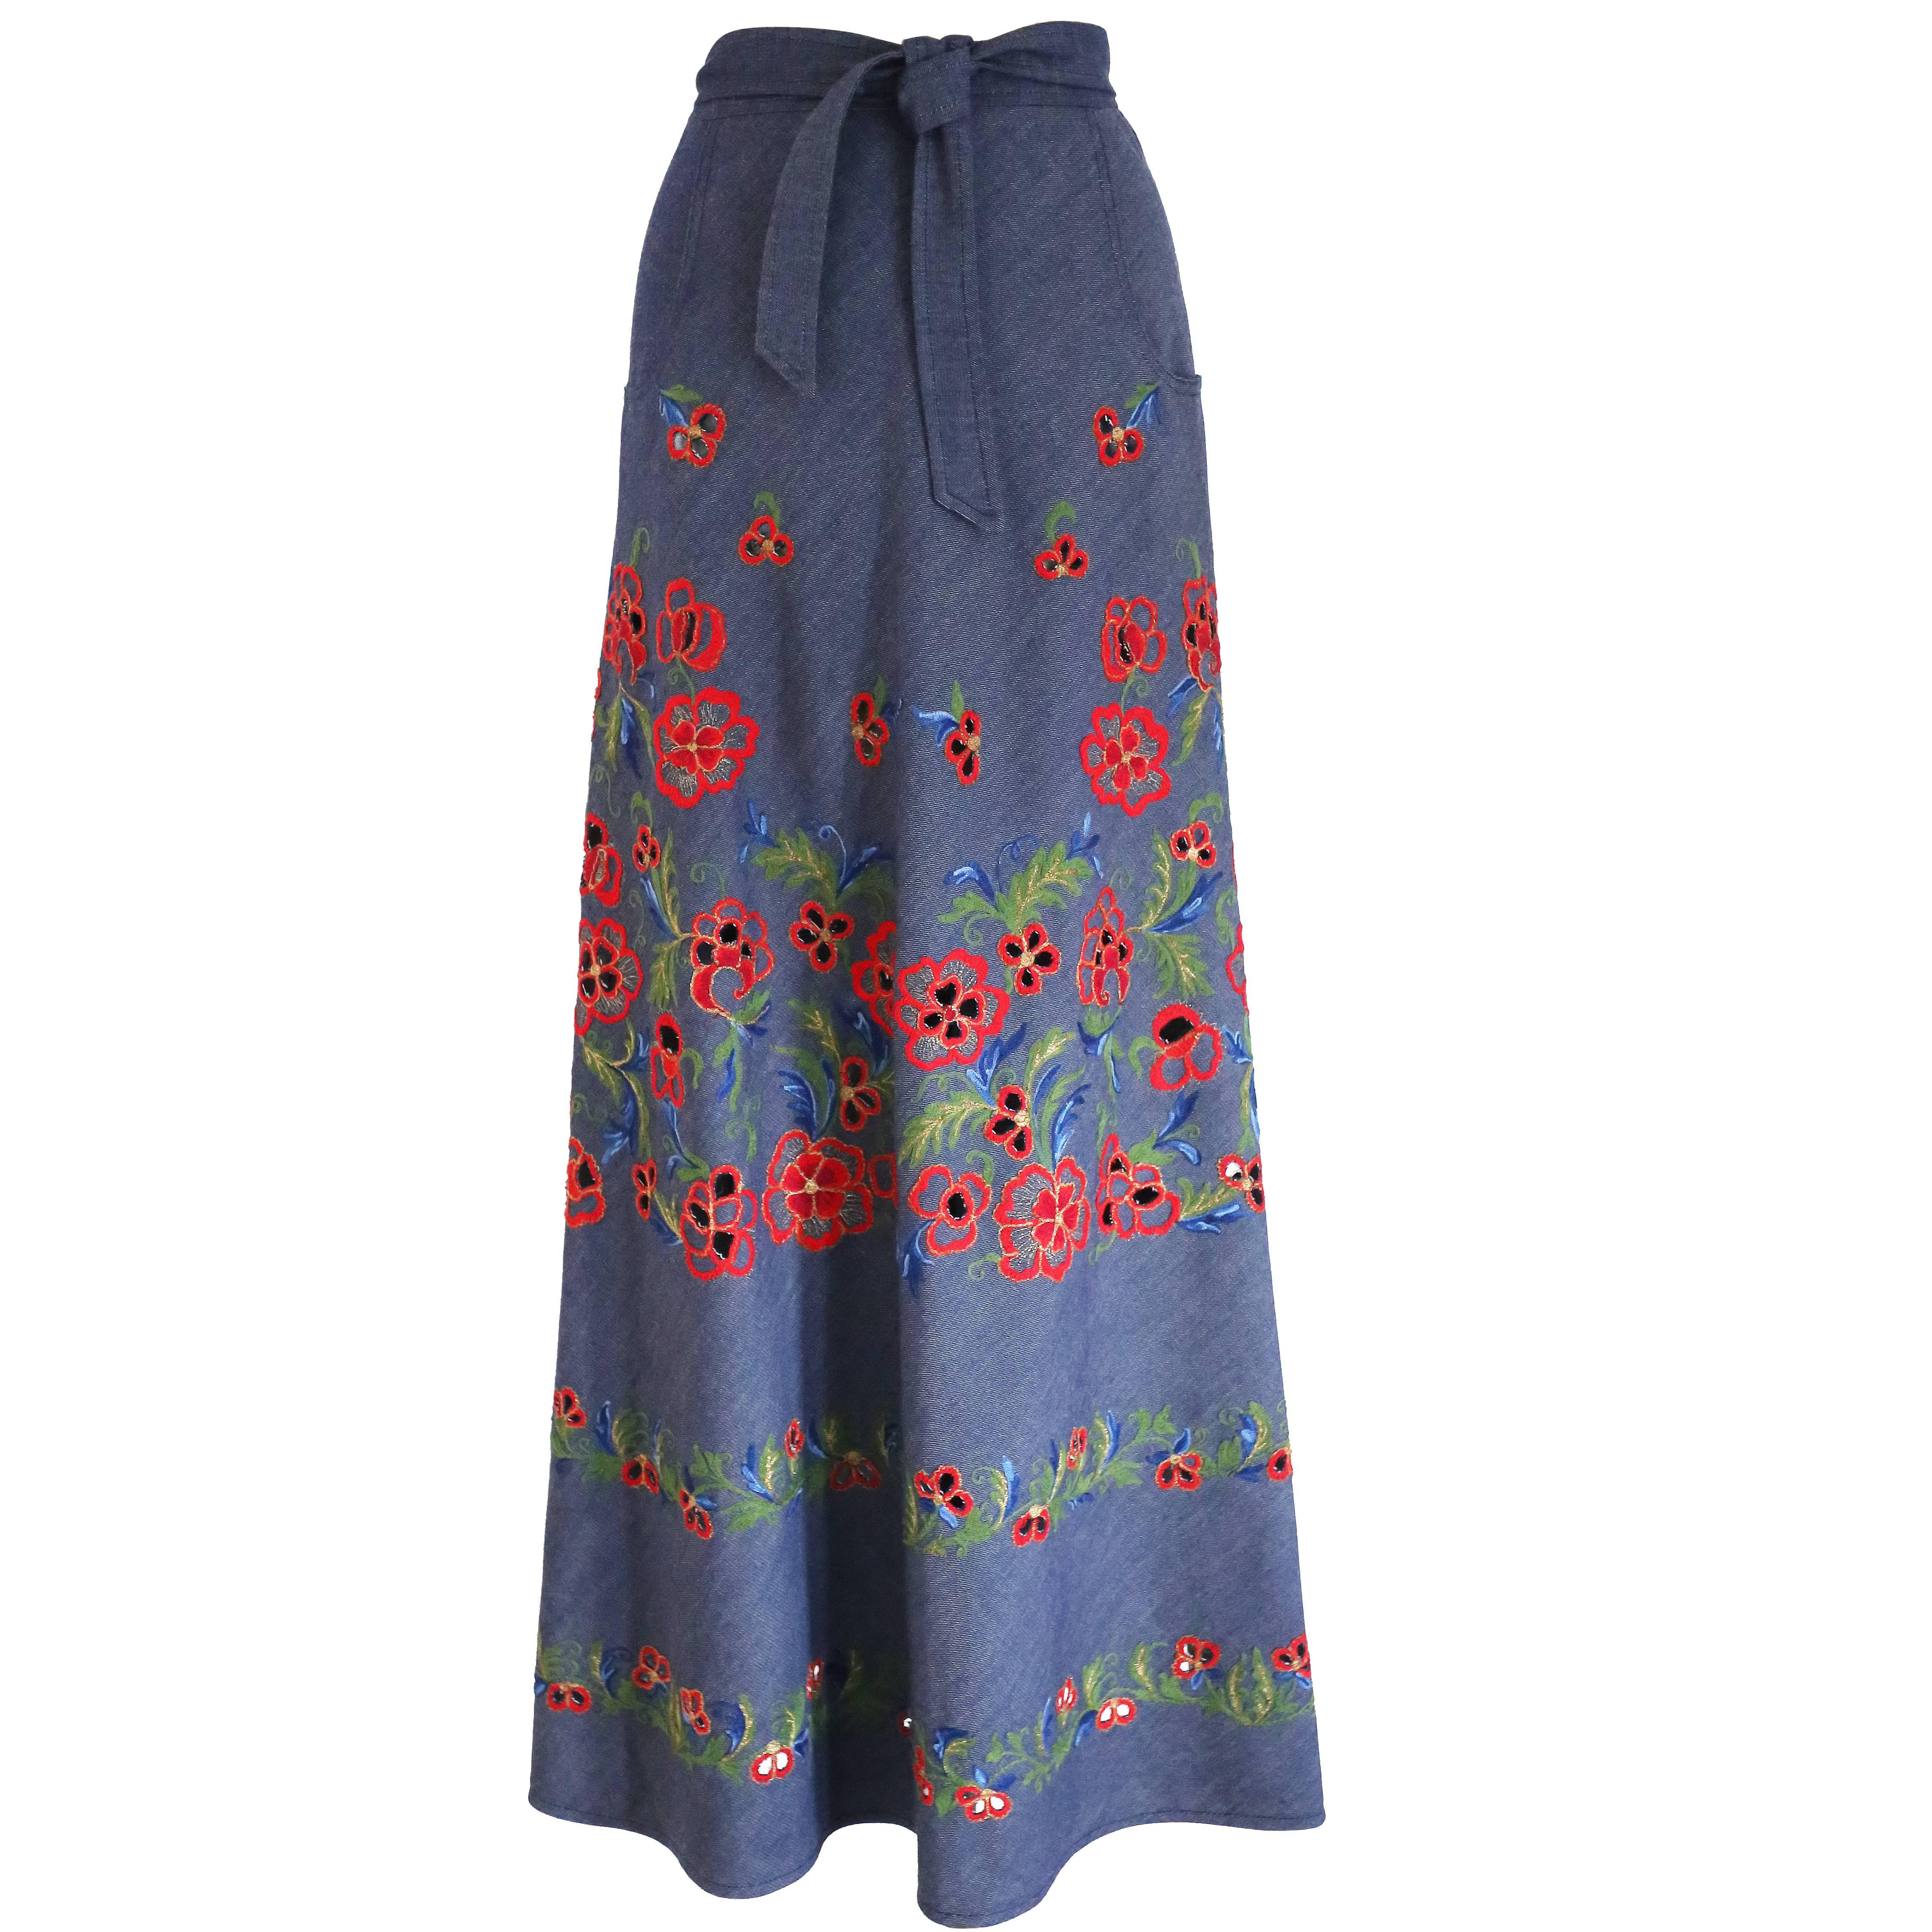 Pirovano couture silk cotton embroidered maxi skirt, c. 1960s